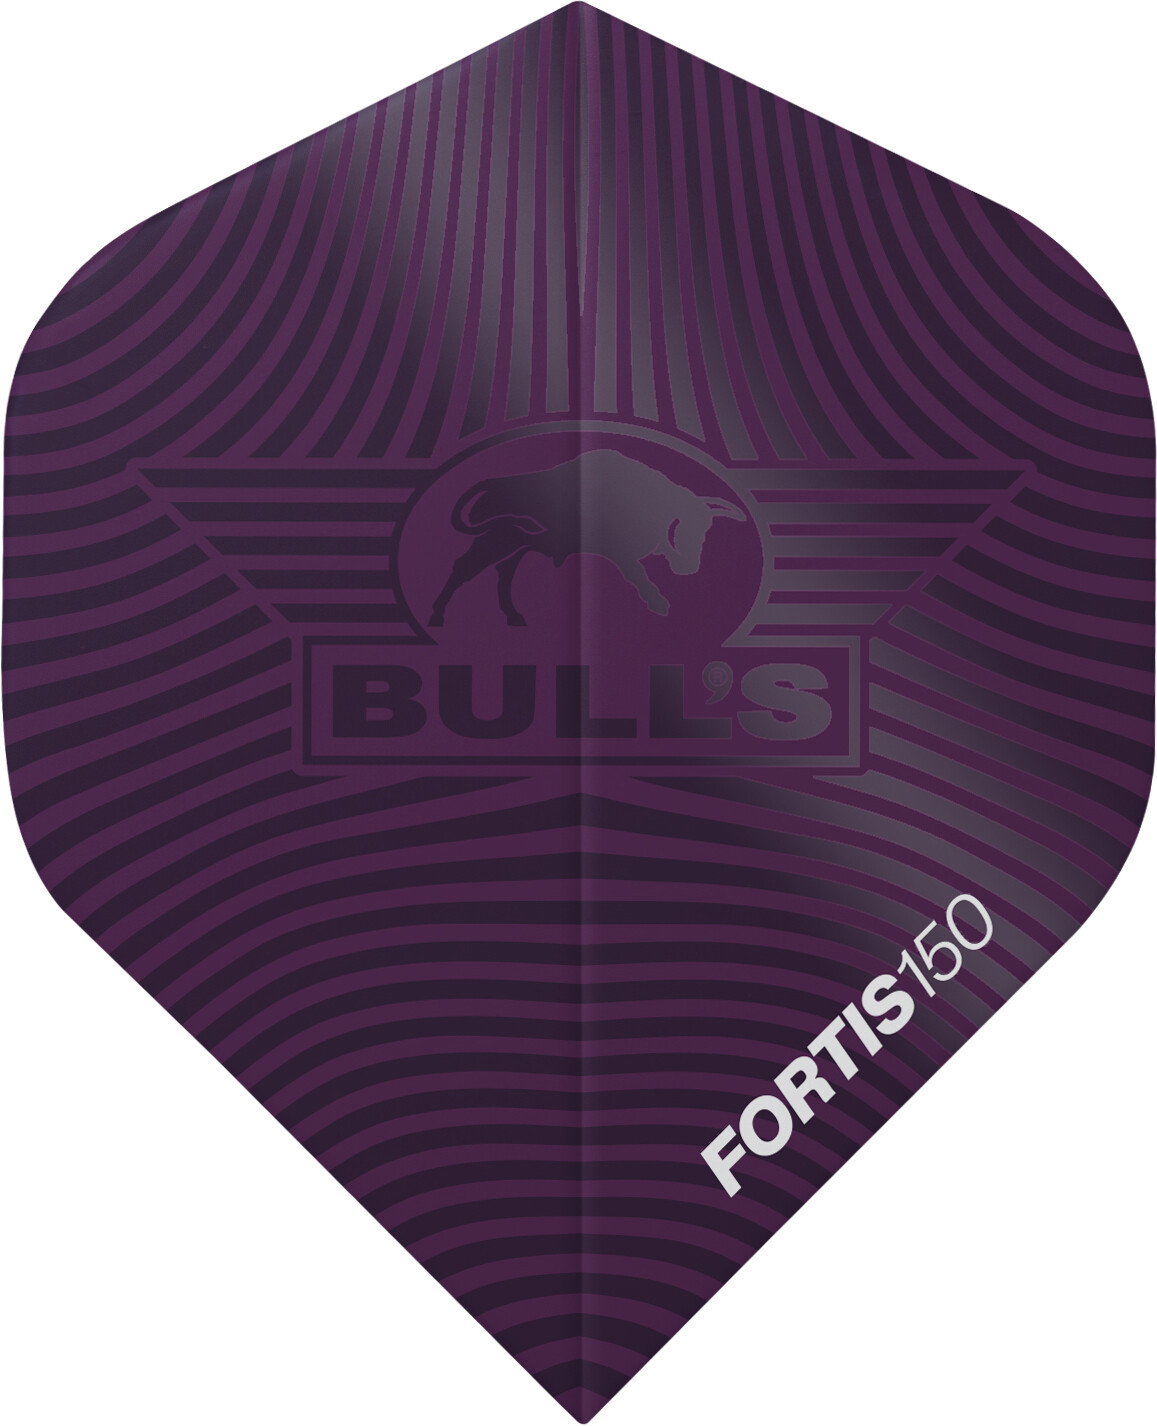 Bull's Fortis 150 Std. Purple